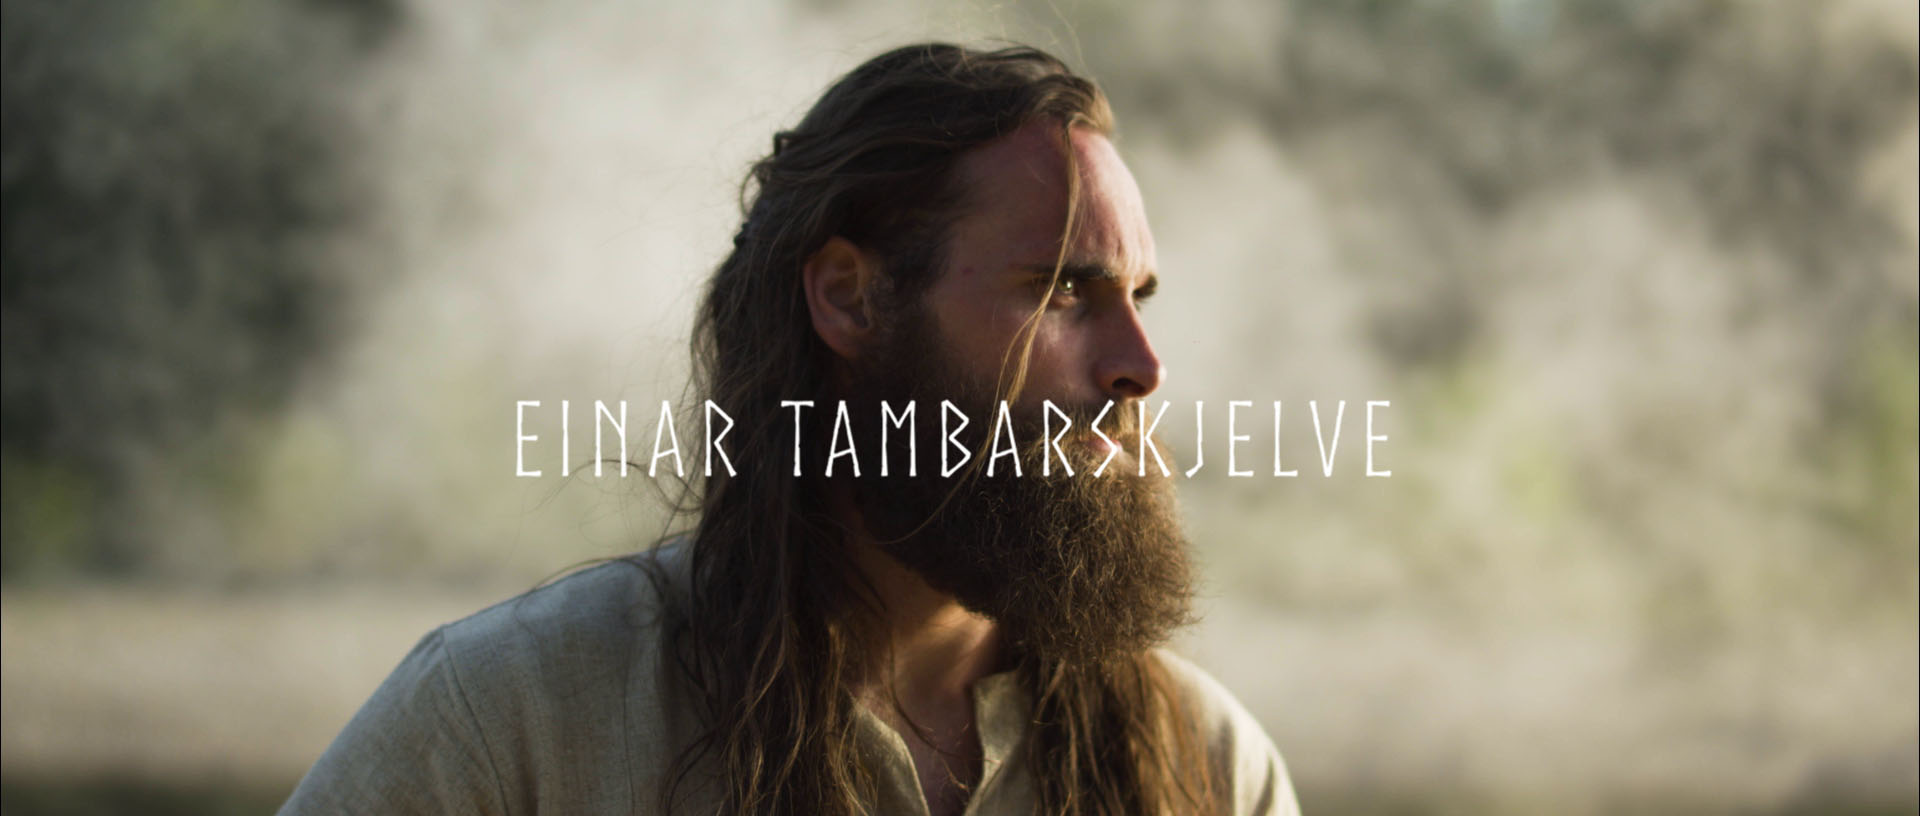 You are currently viewing Einar Tambarskjelve